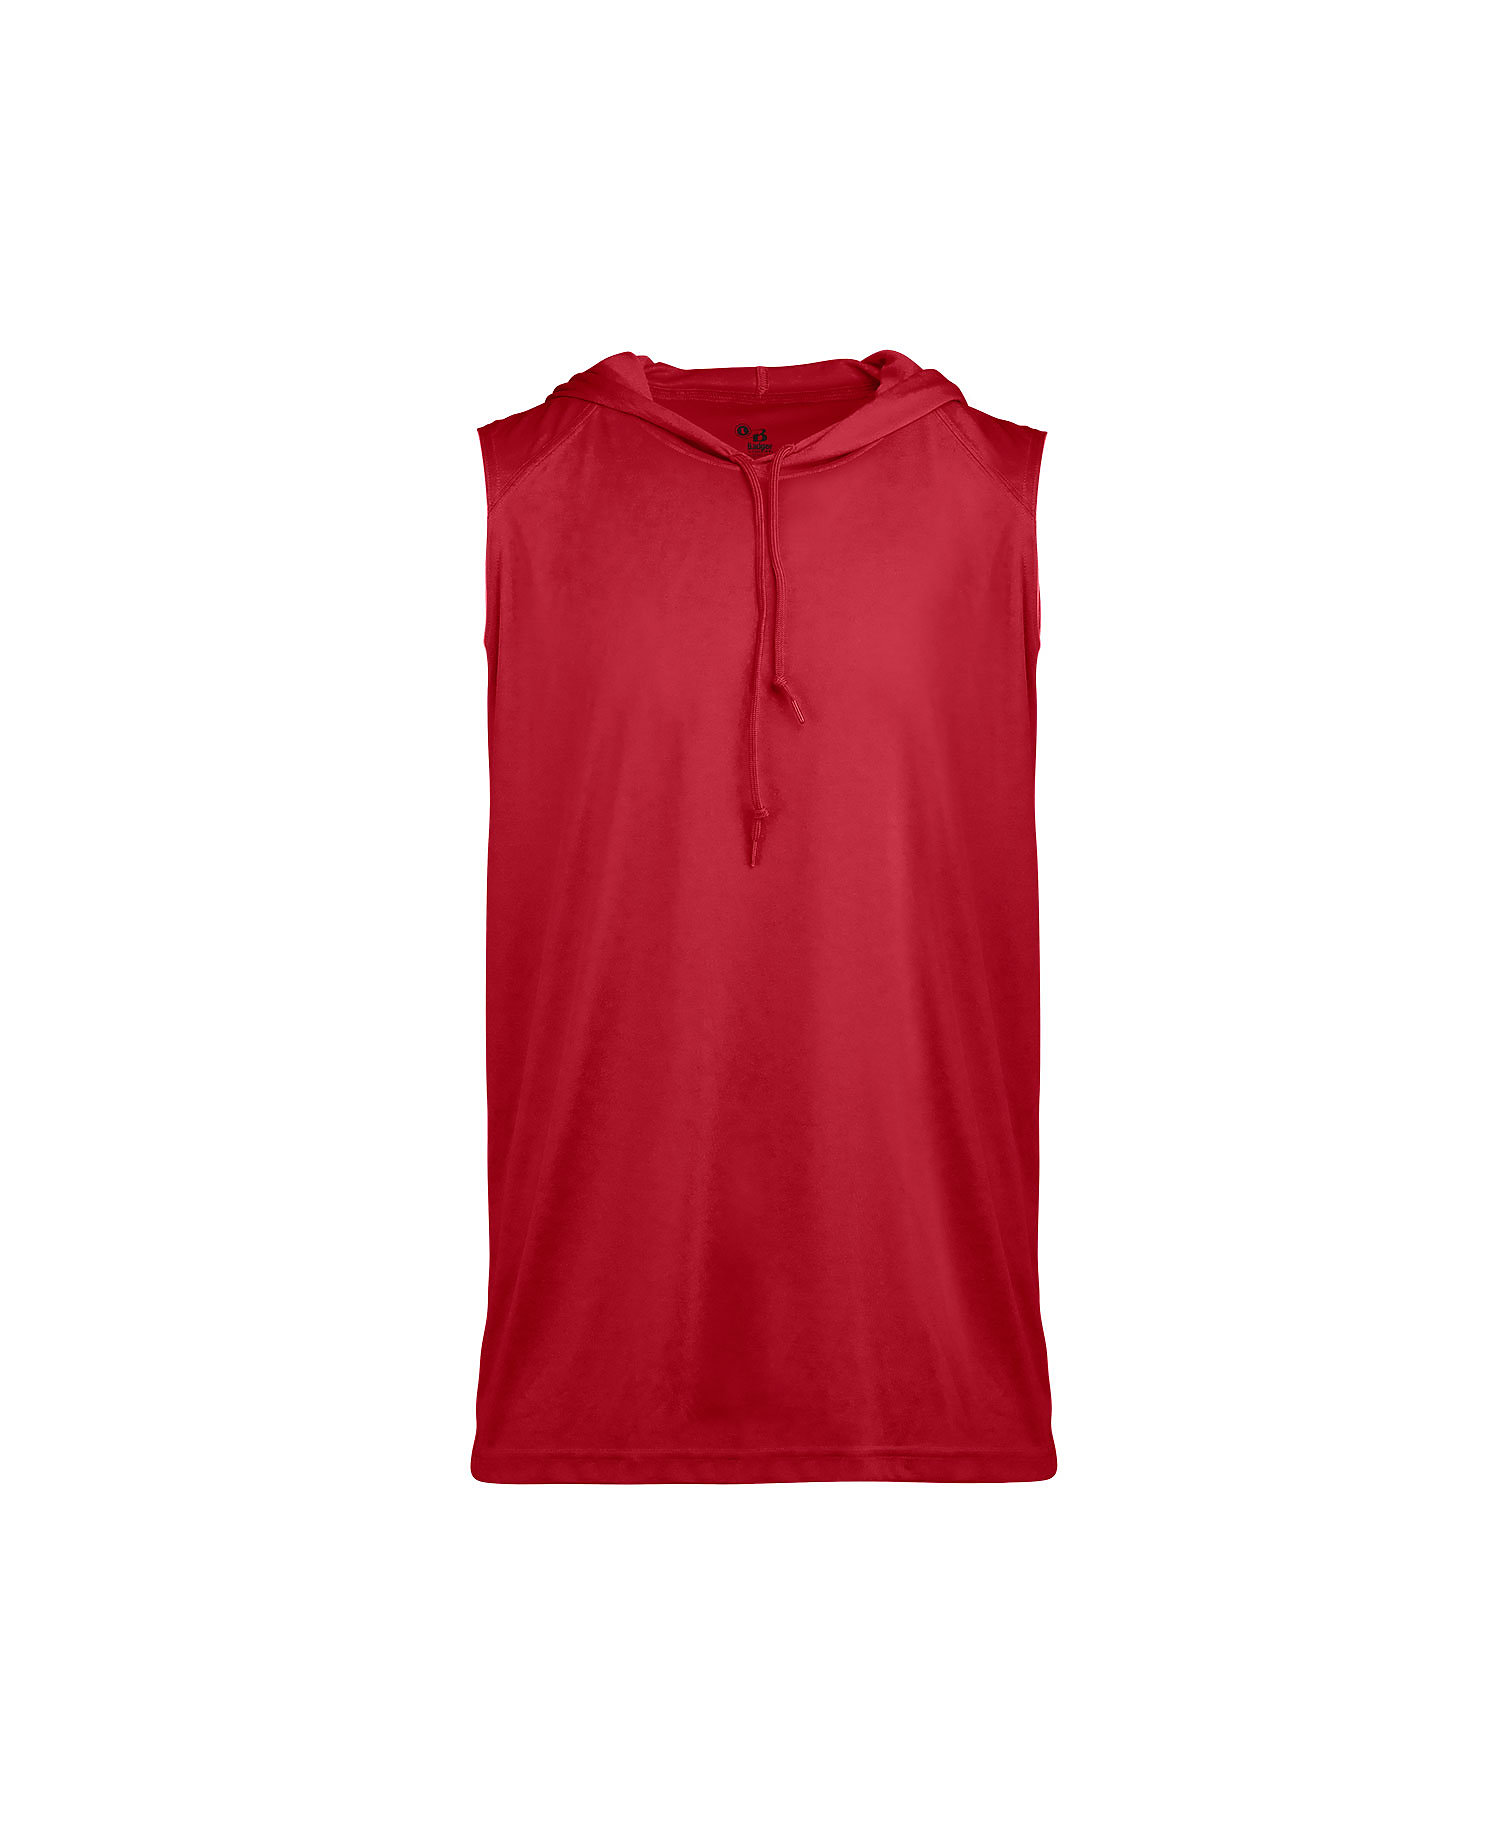 Badger Sport 4108 - Adult B-Core Sleeveless Hood Tee $13.89 - T-Shirts